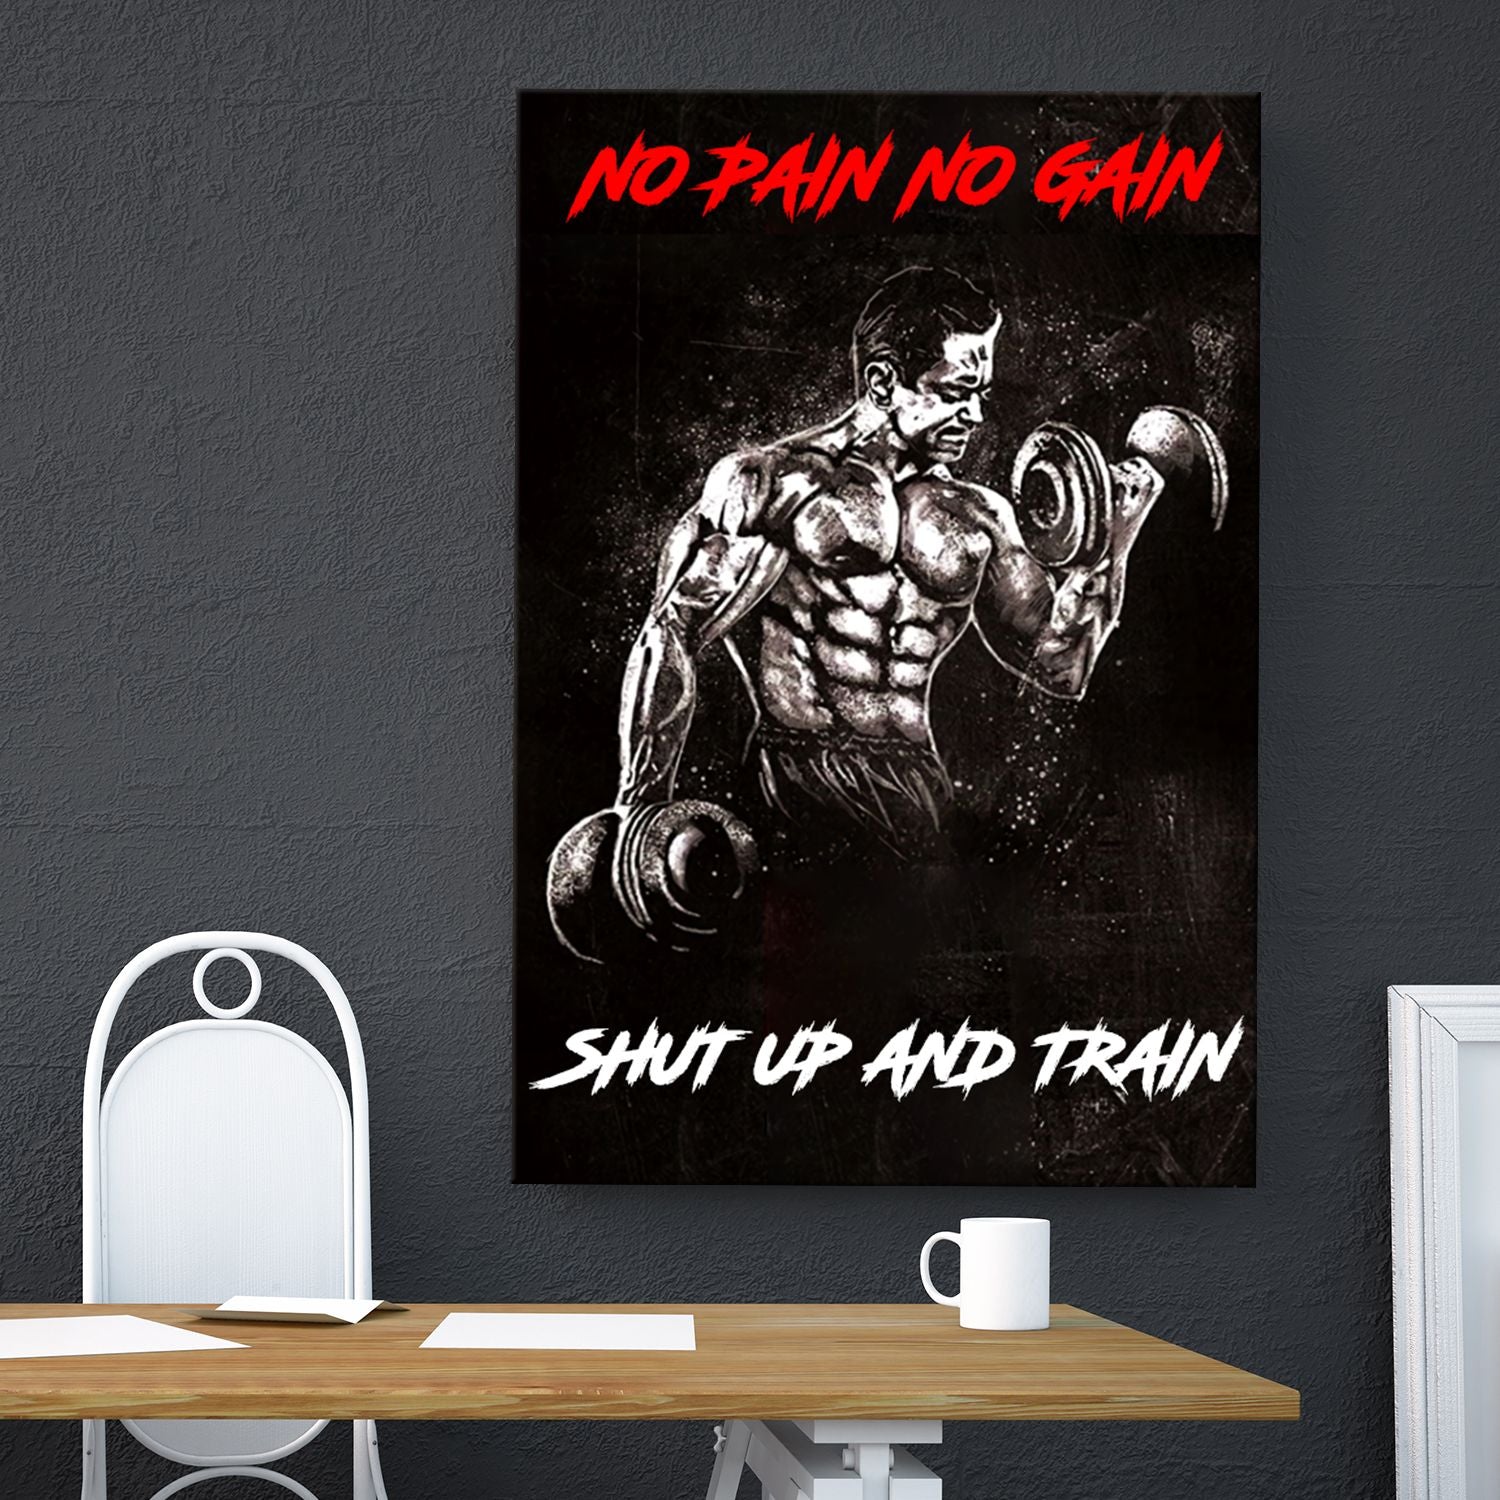 Home Gym Decor No Pain No Gain Shut Up And Train Canvas, Wall Art